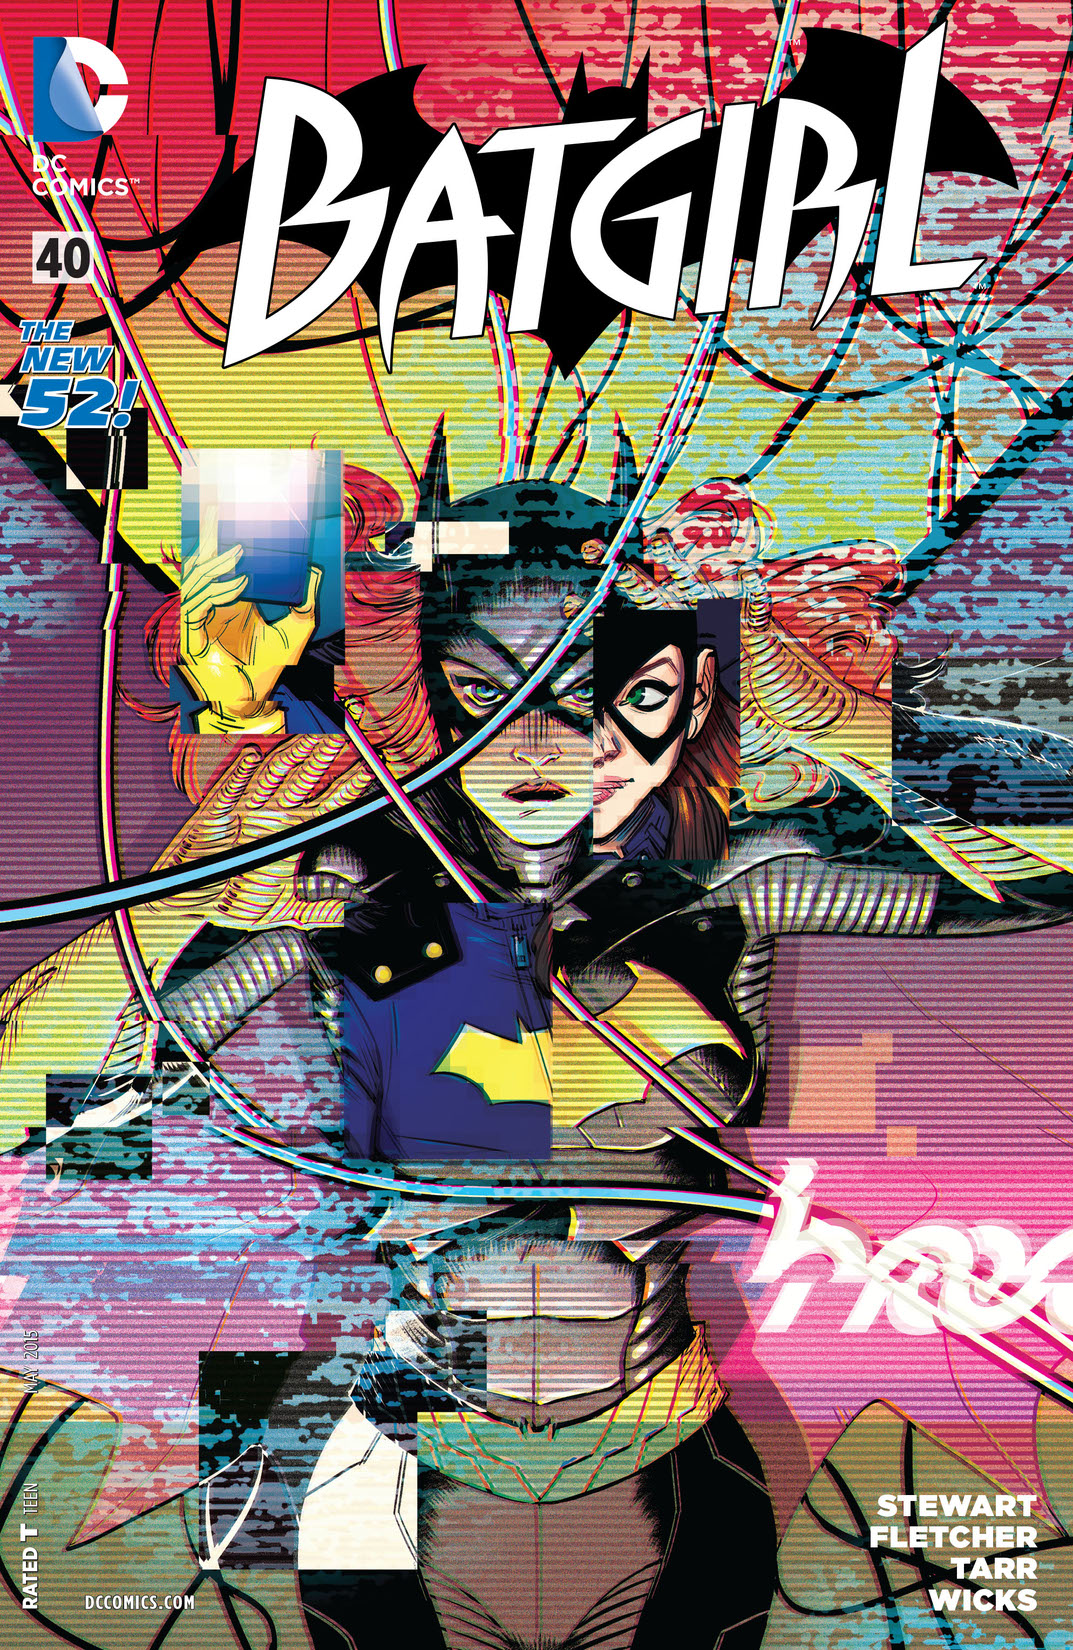 Batgirl (2011-) #40 preview images